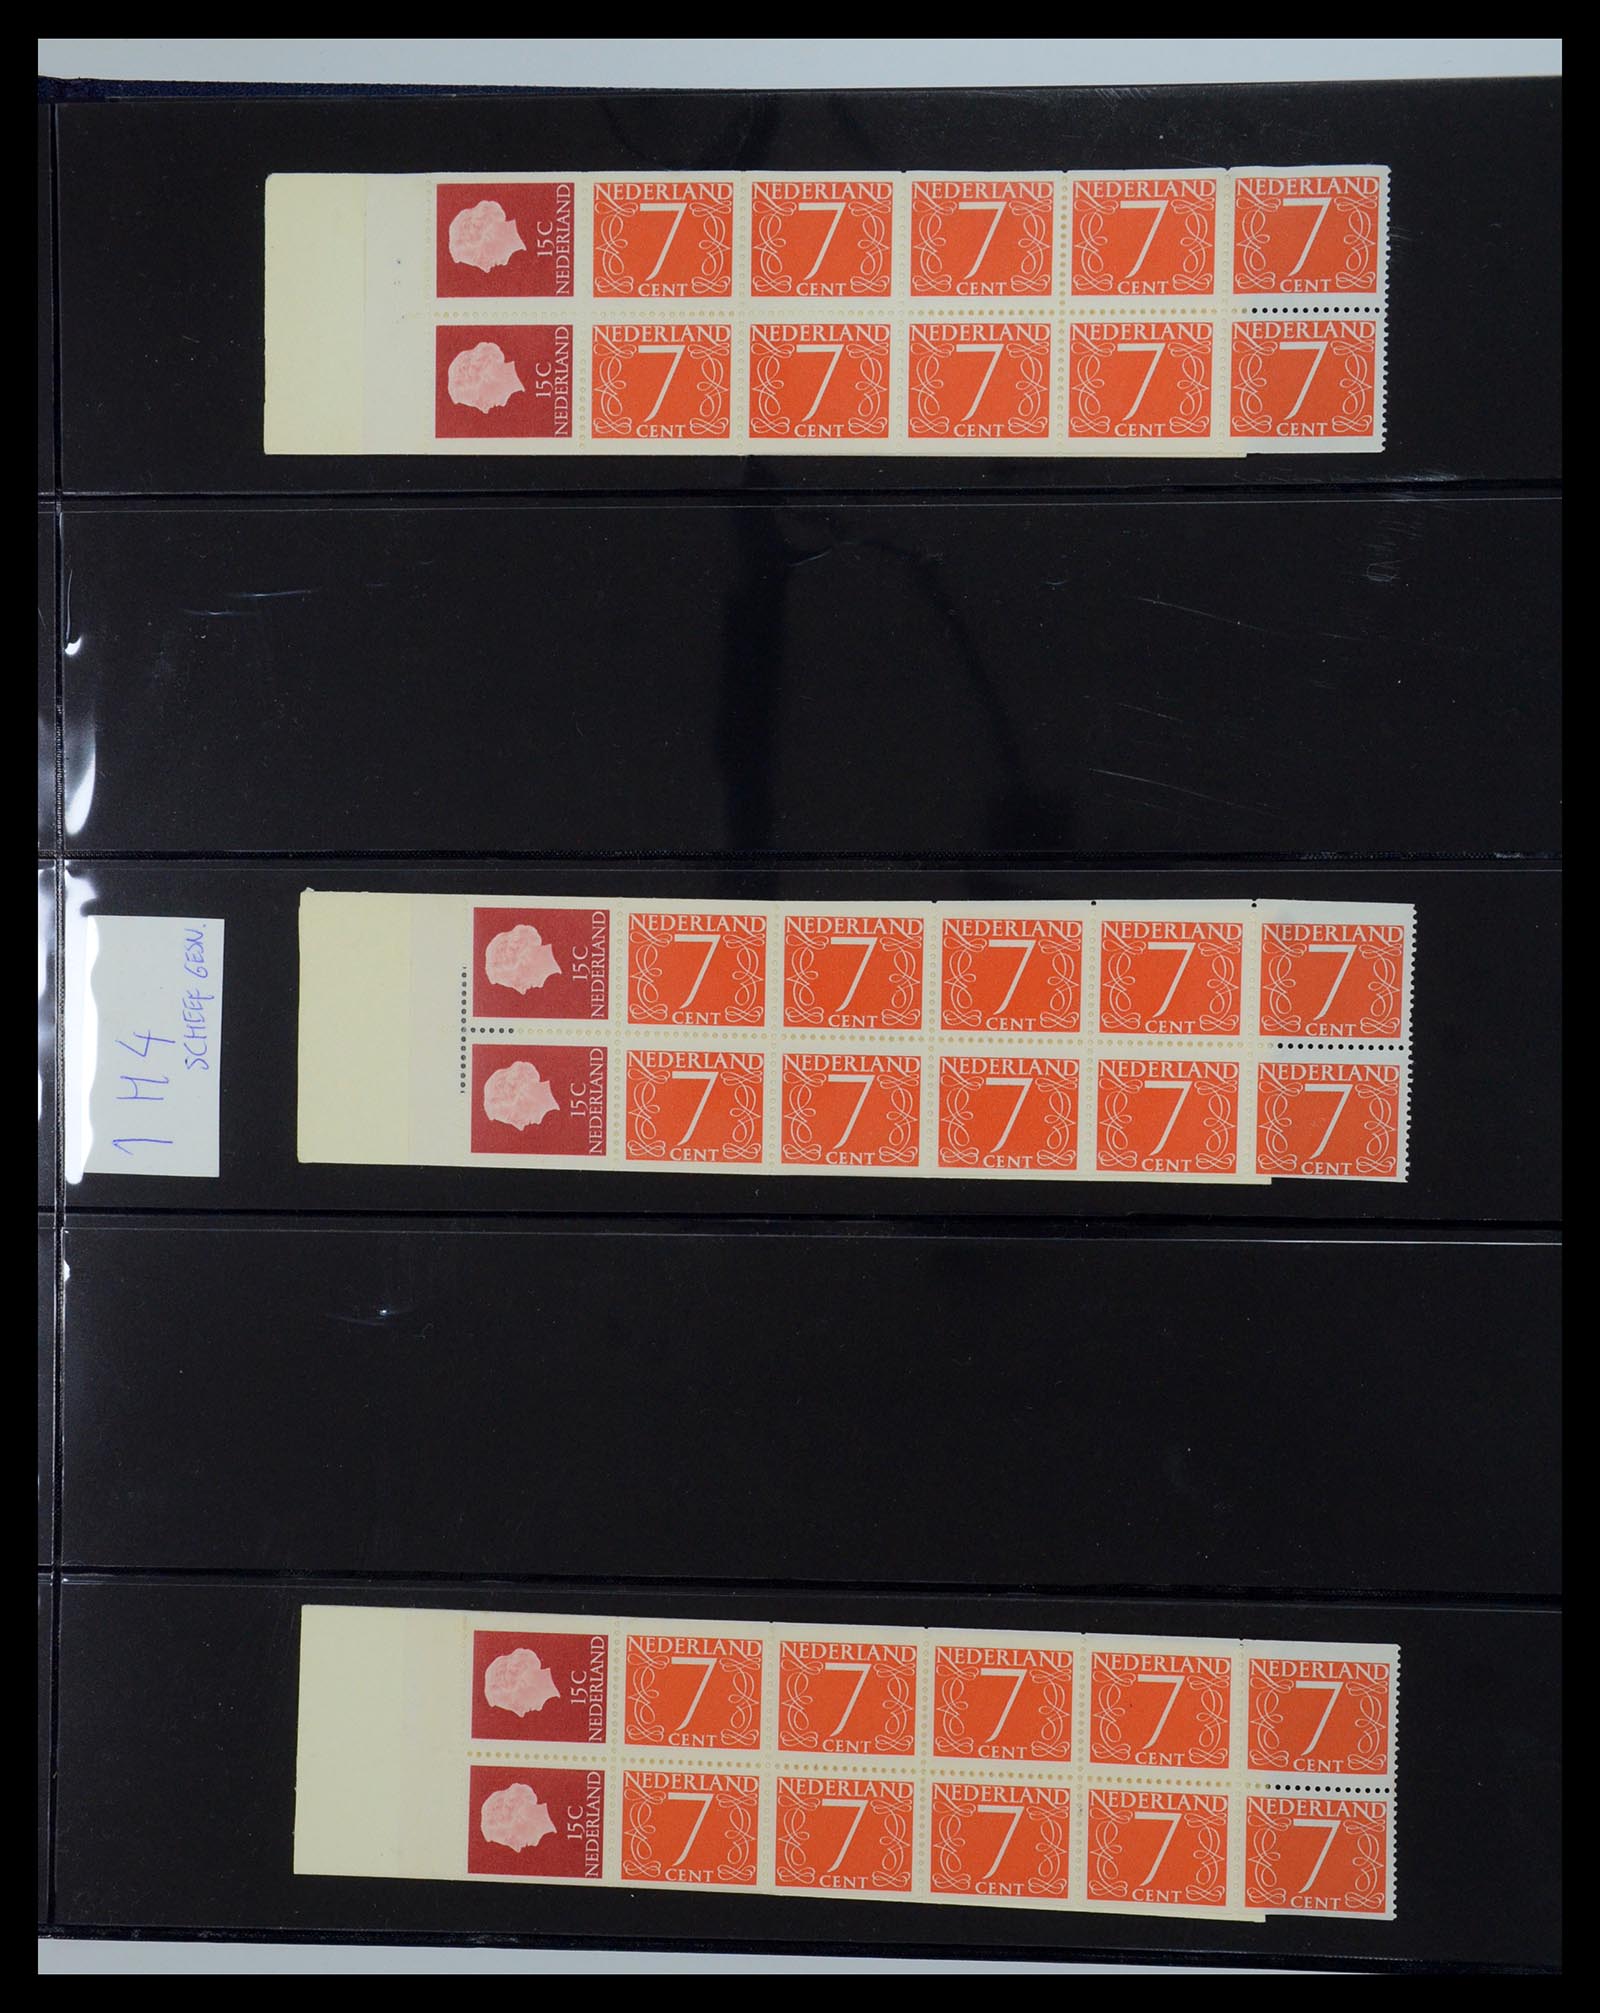 35821 005 - Stamp Collection 35821 Netherlands stamp booklets 1964-1983.